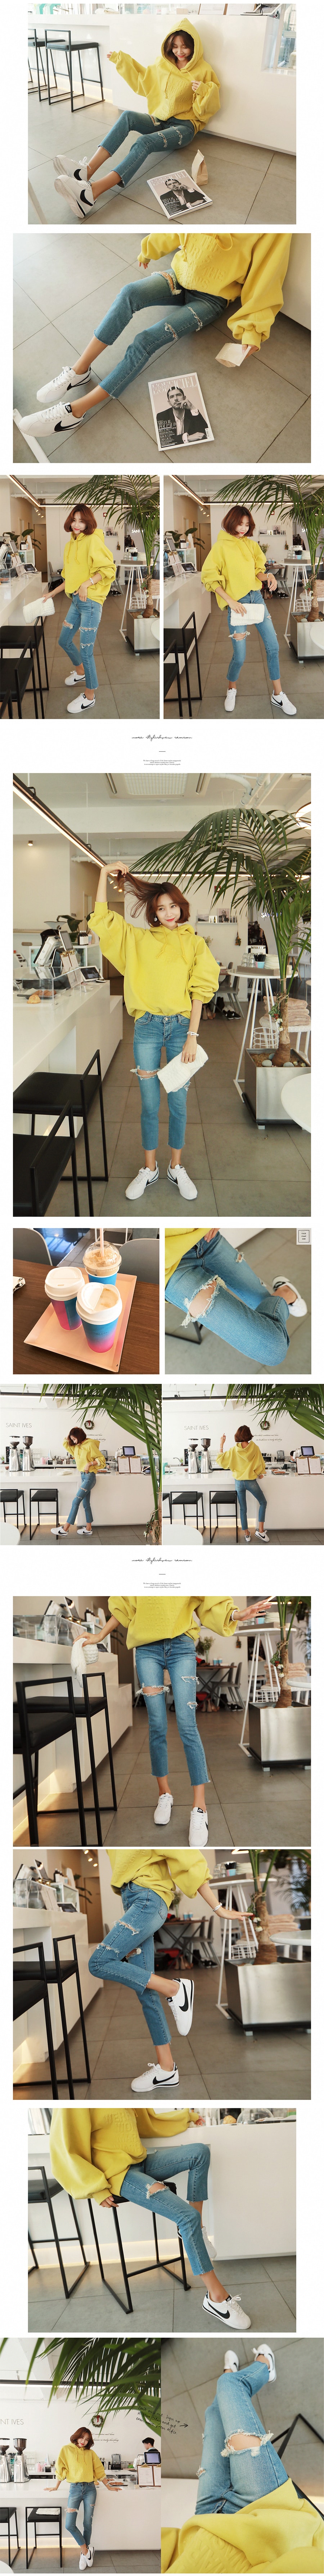 KOREA [Free Shipping] Distressed Straight Crop Jeans #Light Blue M(27-28)